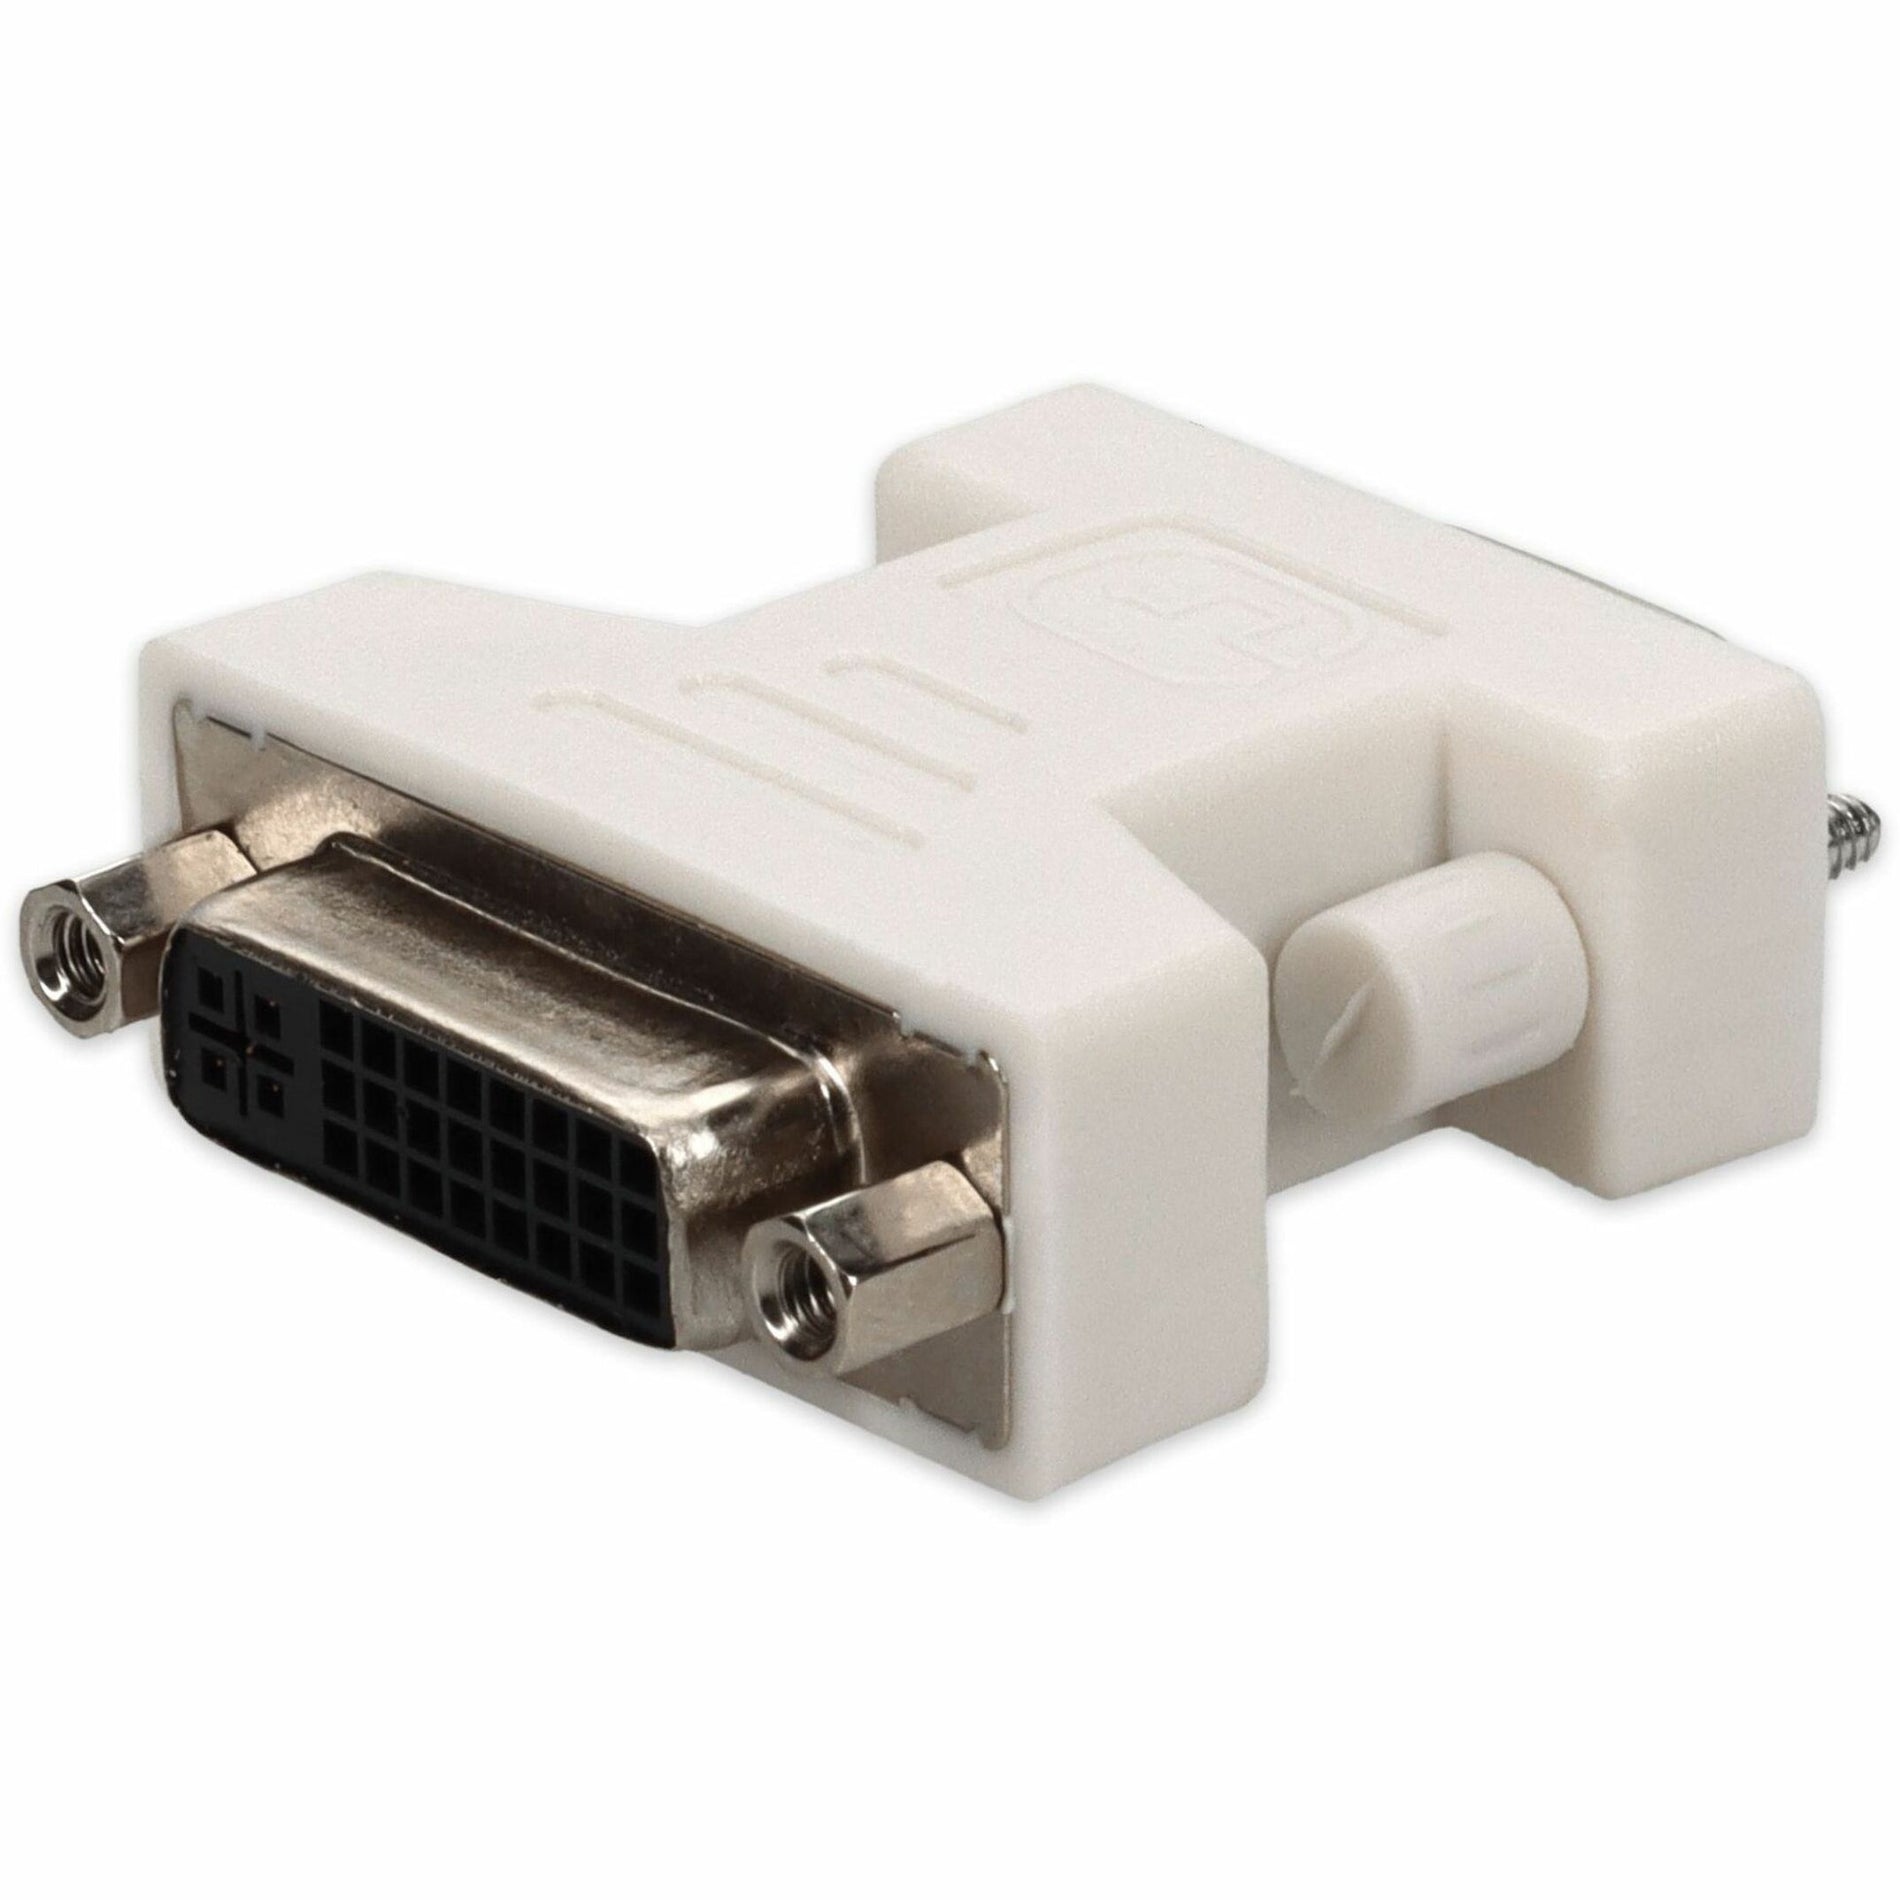 Adaptador de vídeo VGA/DVI VGA2DVIW blanco compatible con DVI-D M/H. Marca: AddOn traducido a marca: Incorporar.